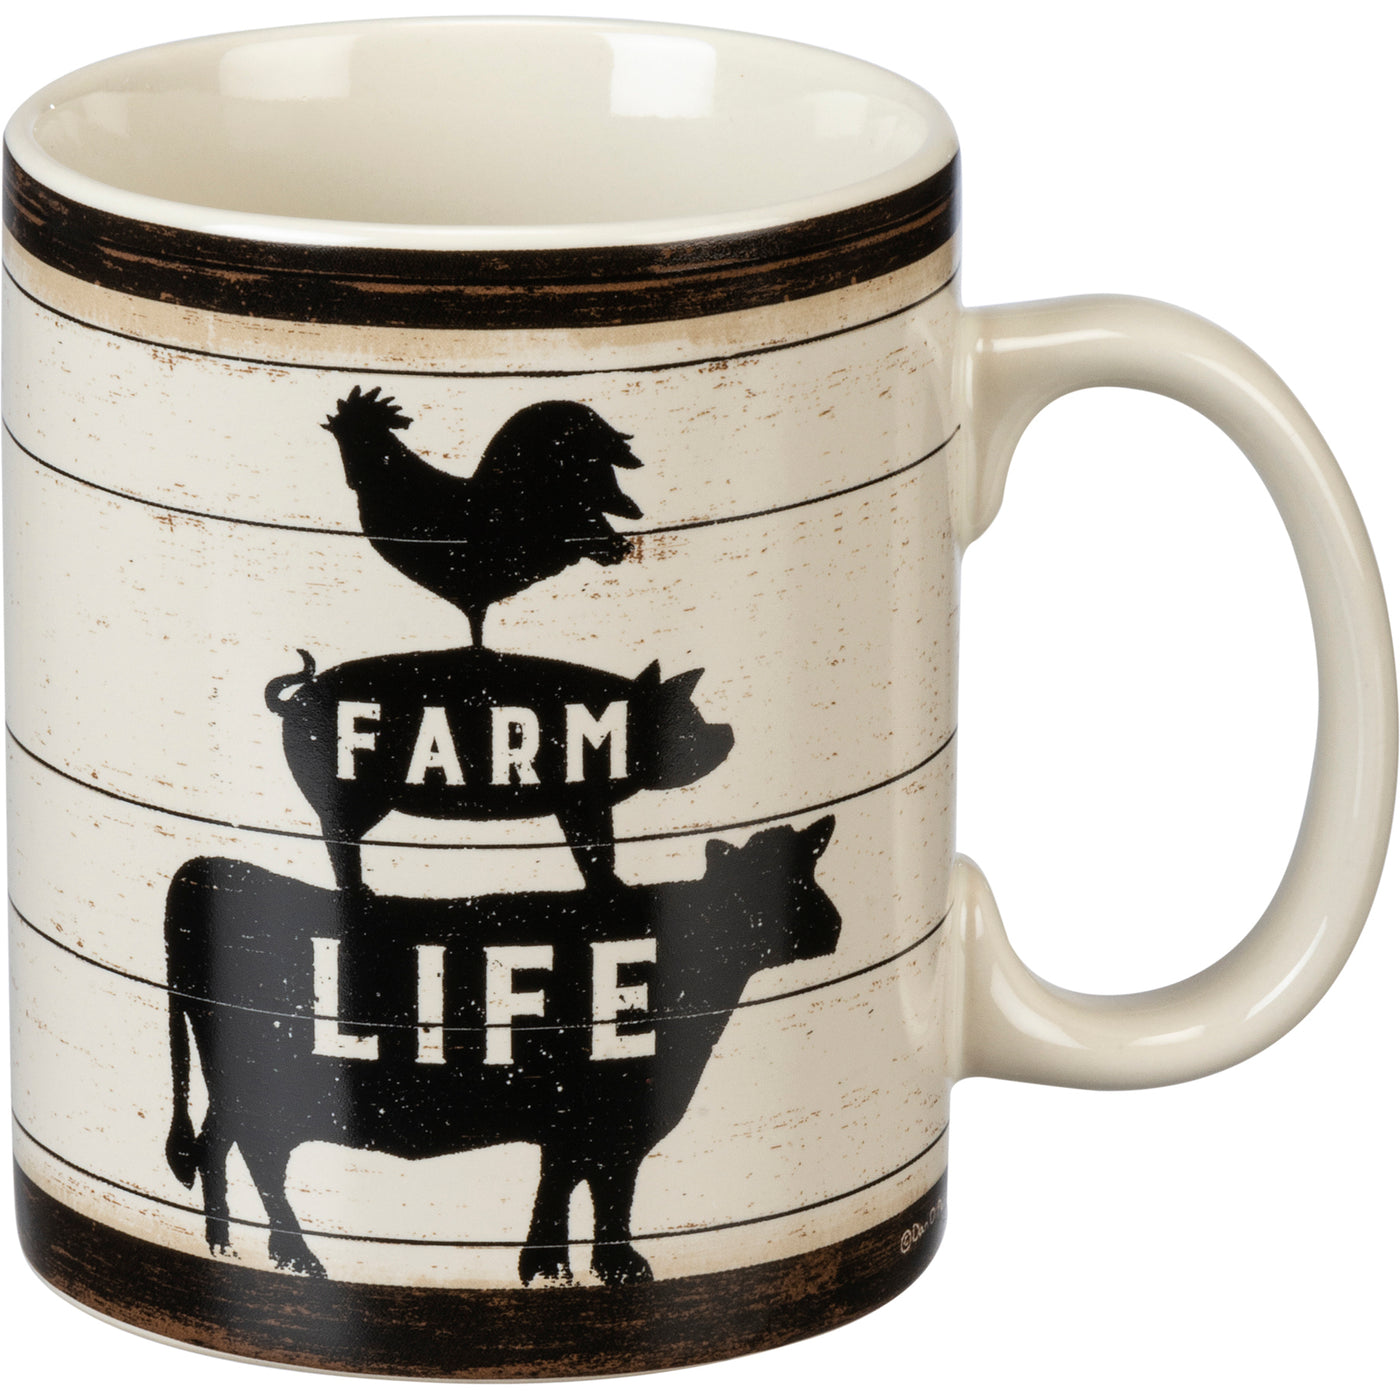 First Coffee Then I Do Farm Things Mug